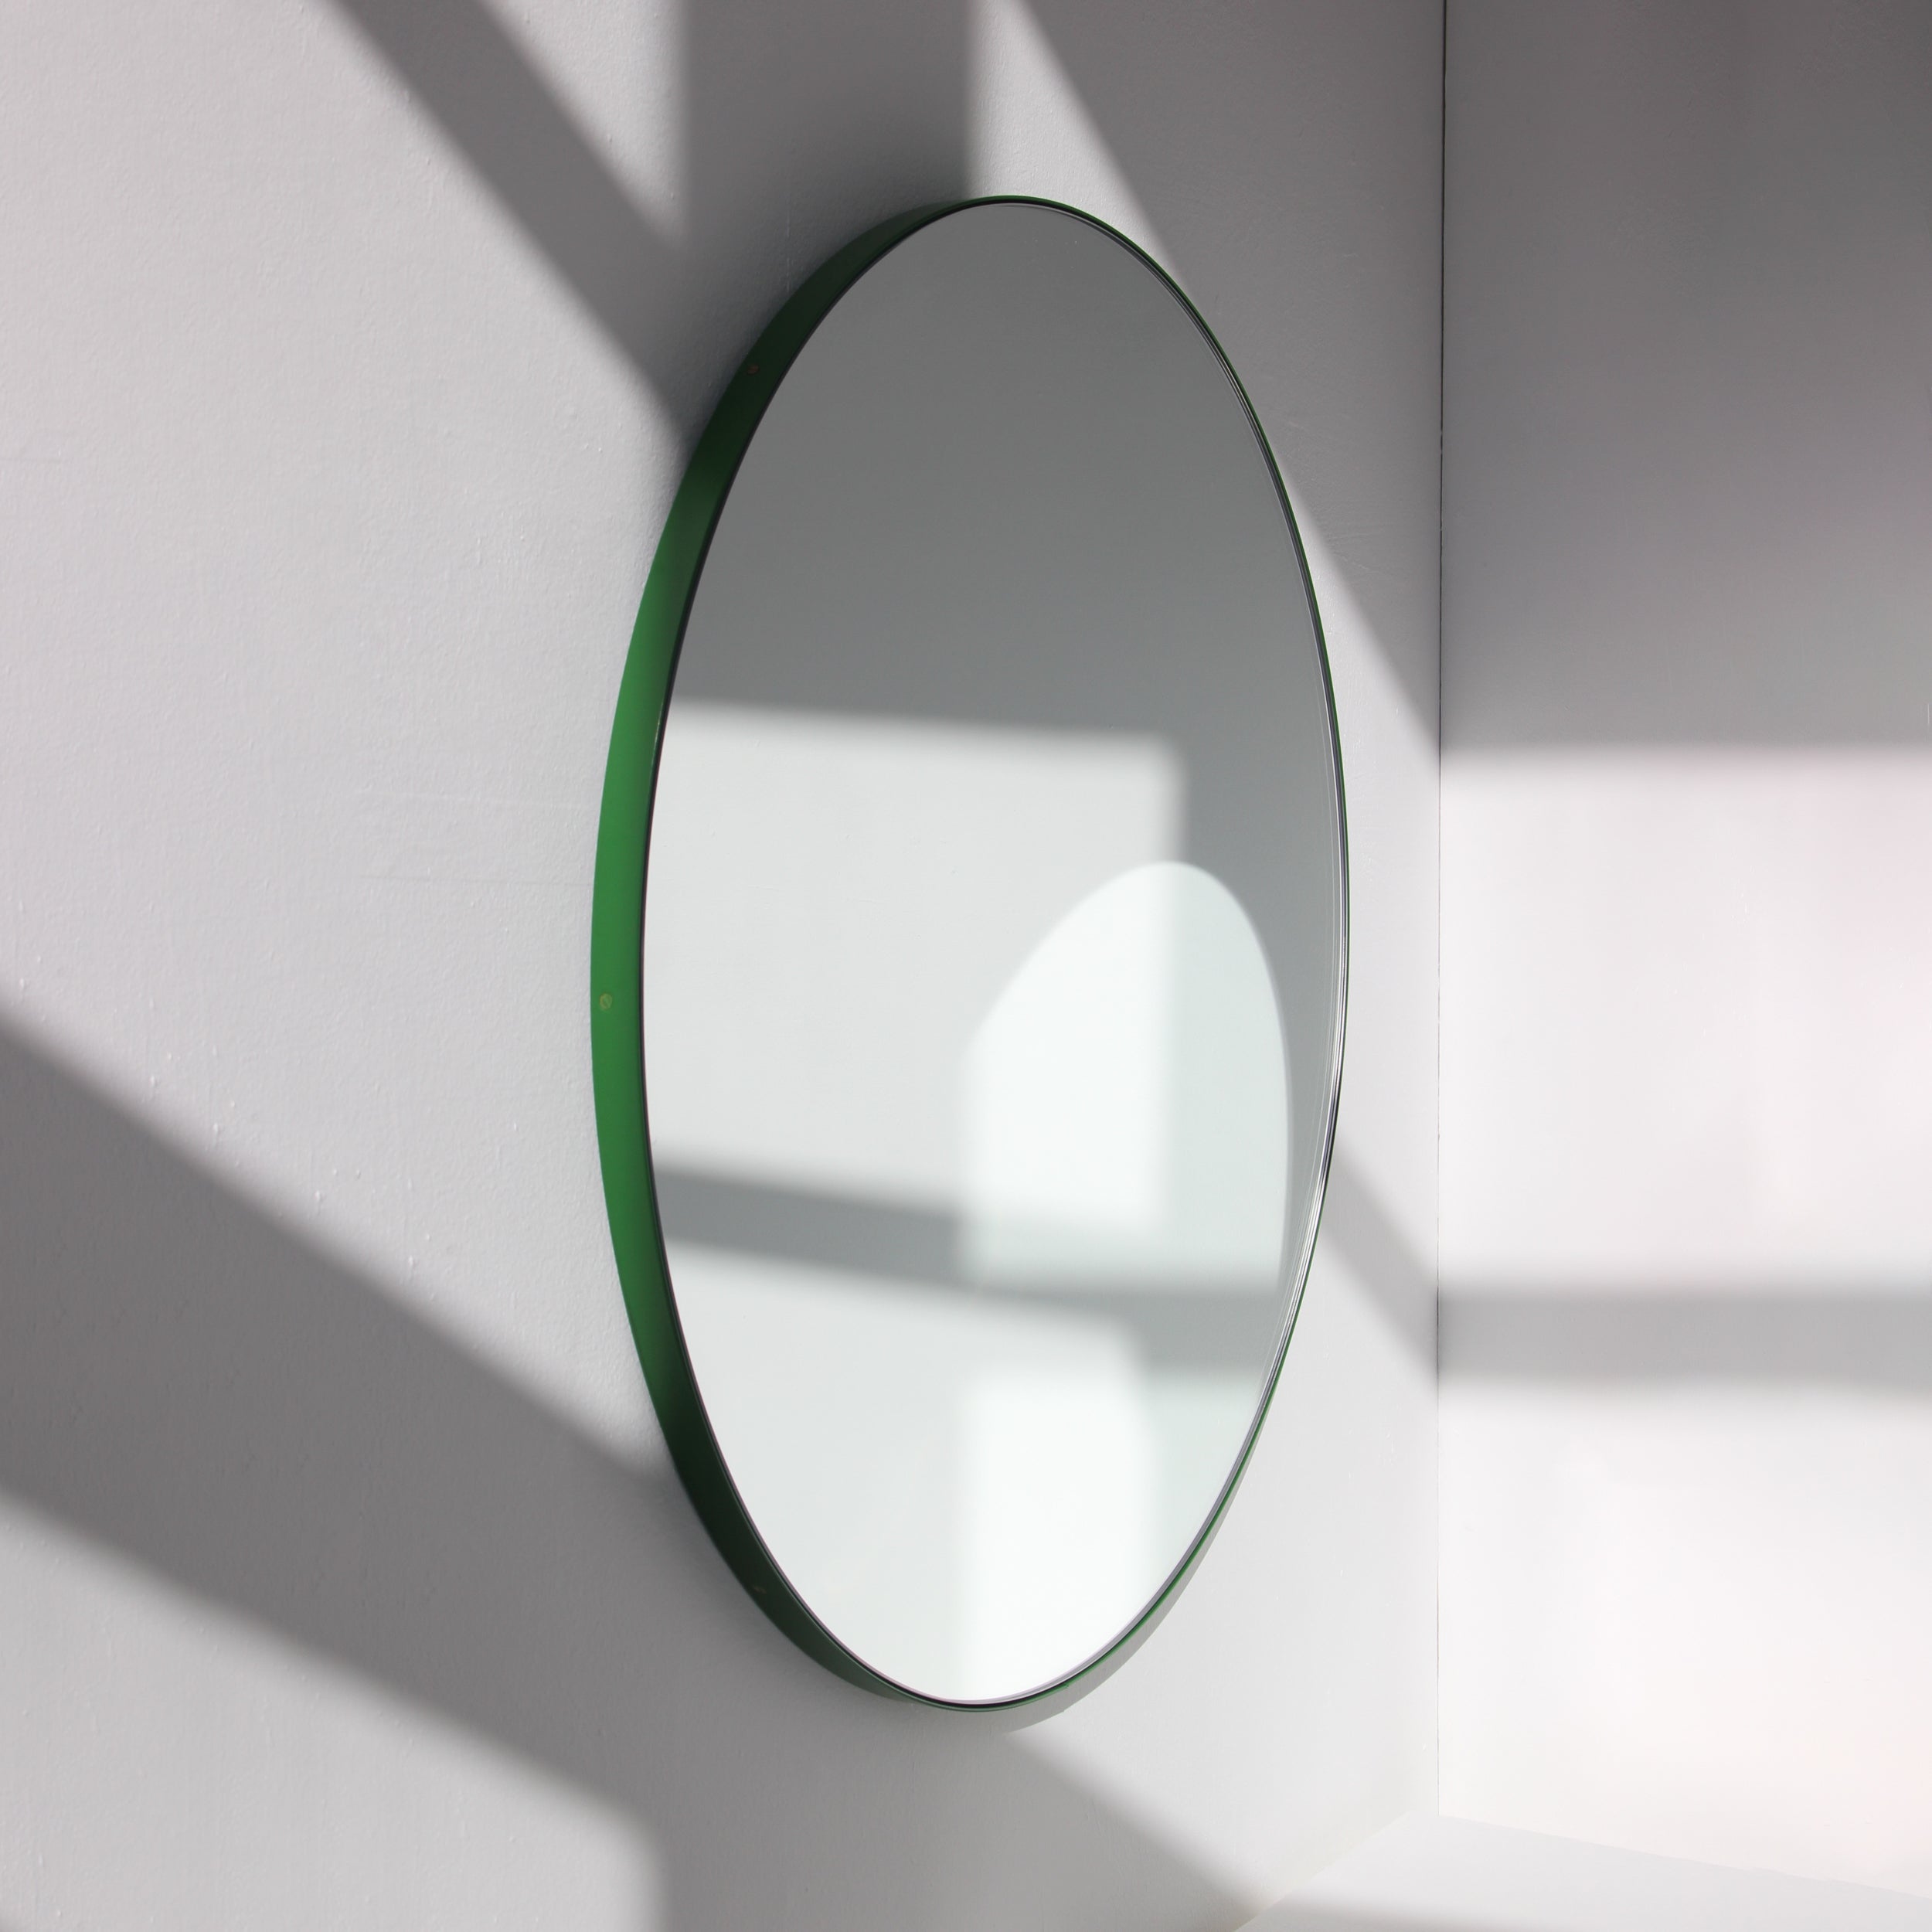 Miroir rond minimaliste avec cadre vert Orbis, petit